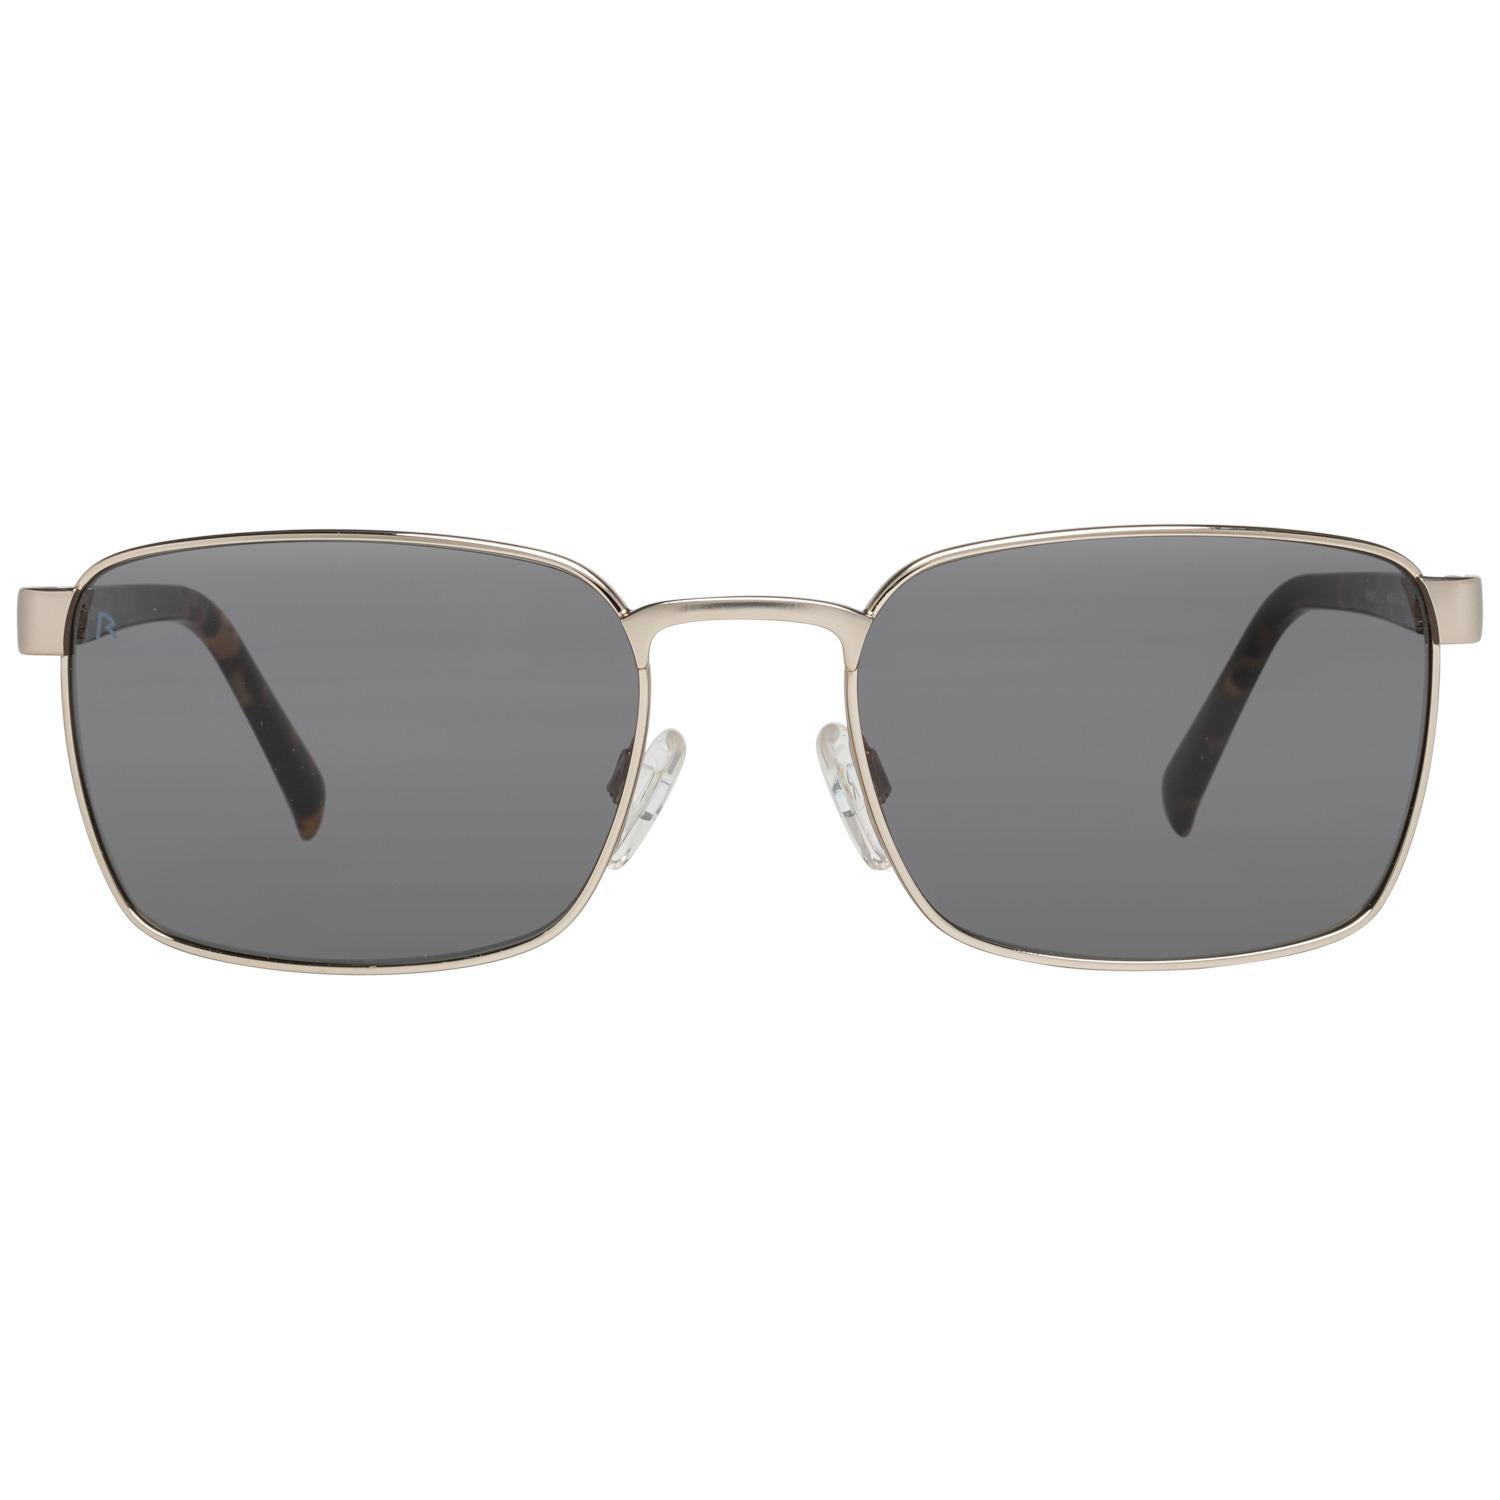 Rodenstock Mint Unisex Silver Sunglasses R1417 C 56-19-140 mm 2